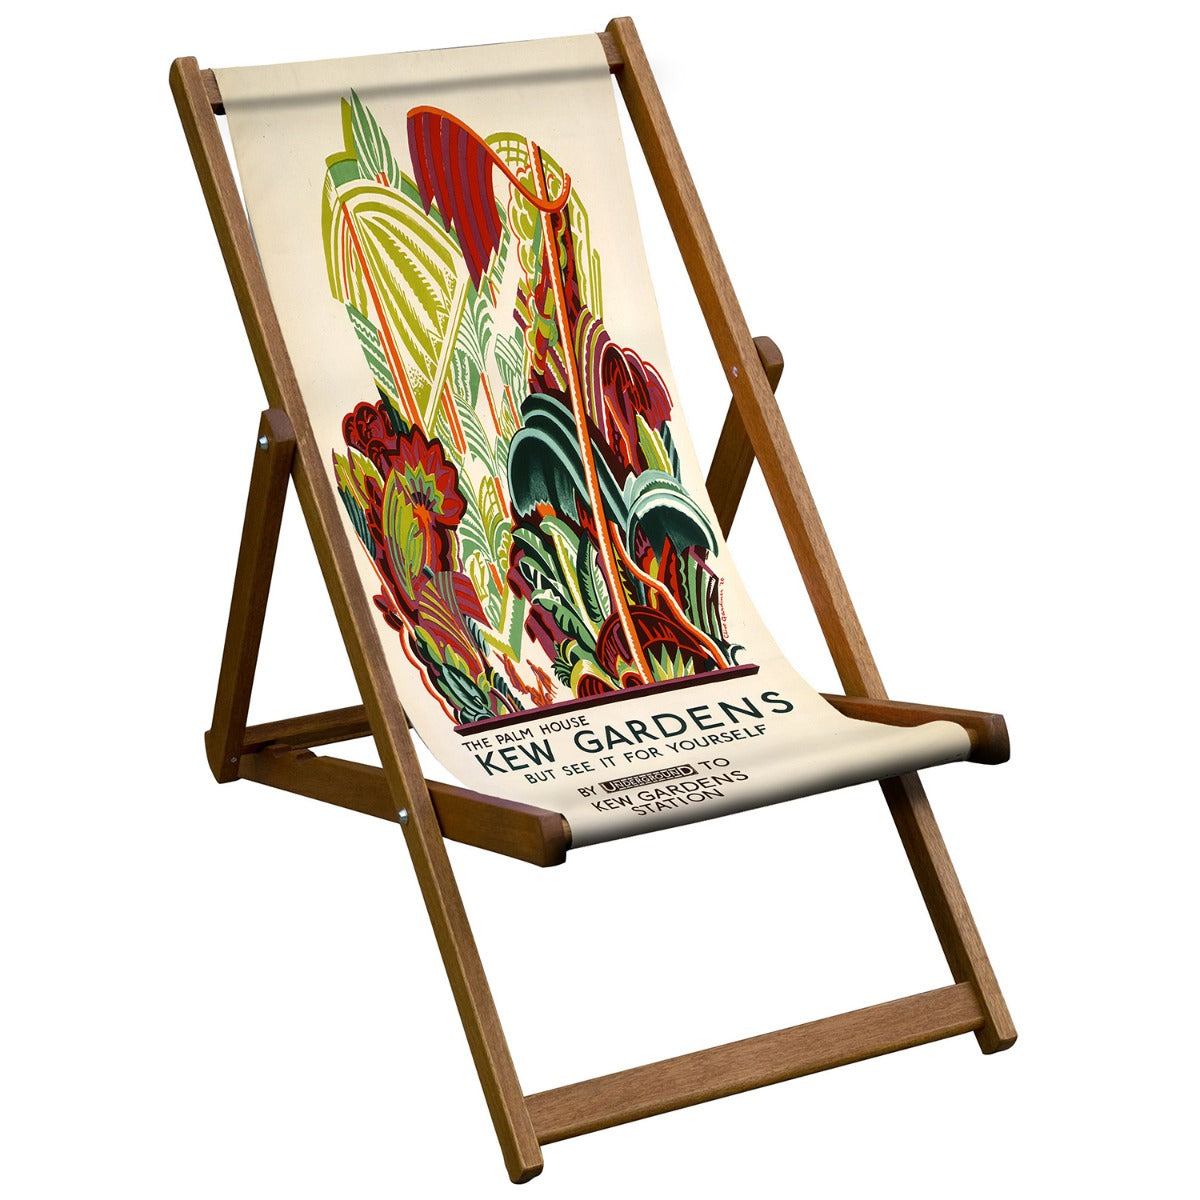 Vintage Inspired Wooden Deckchair- Palm House Kew Gardens- London Transport Poster